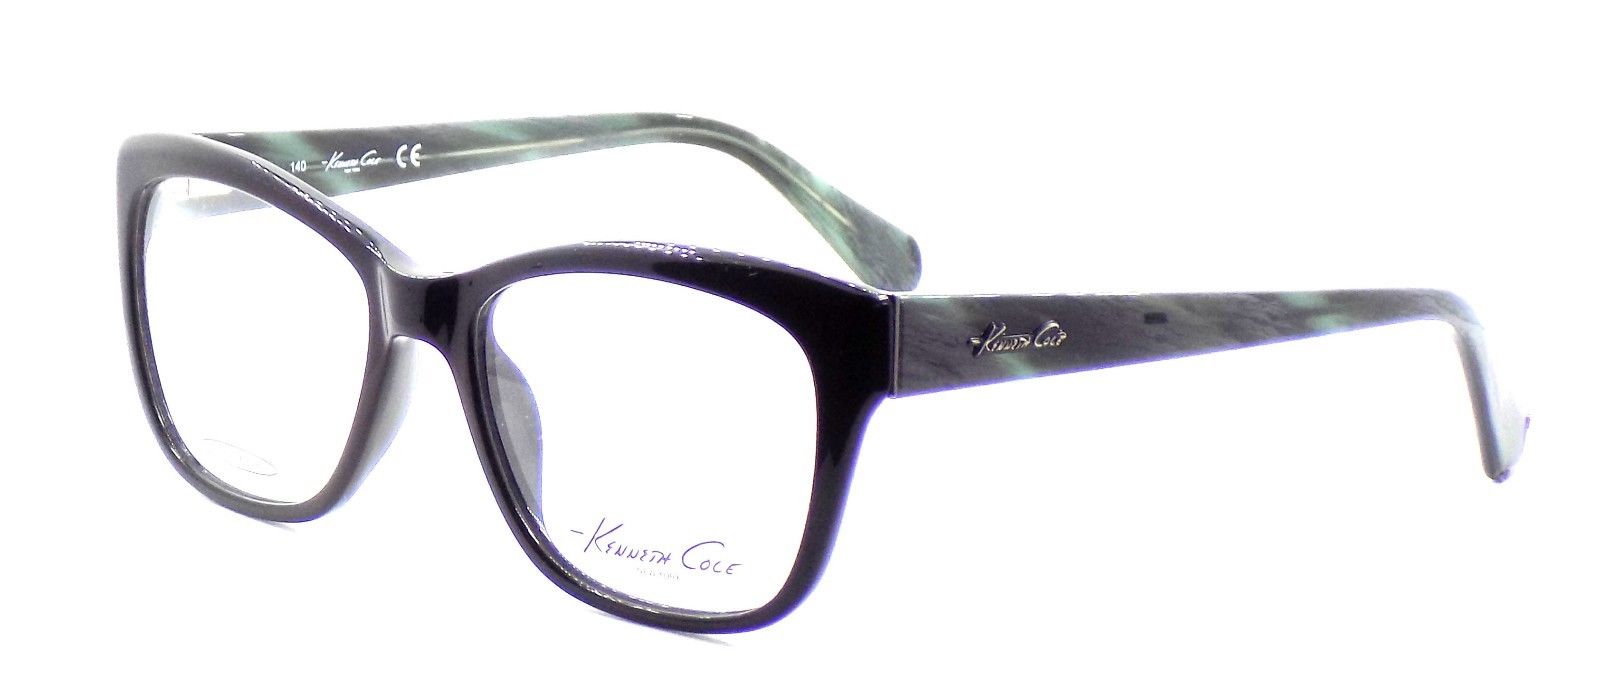 1-Kenneth Cole NY KC0224 001 Women's Eyeglasses Frames 53-17-140 Shiny Black +CASE-664689652761-IKSpecs